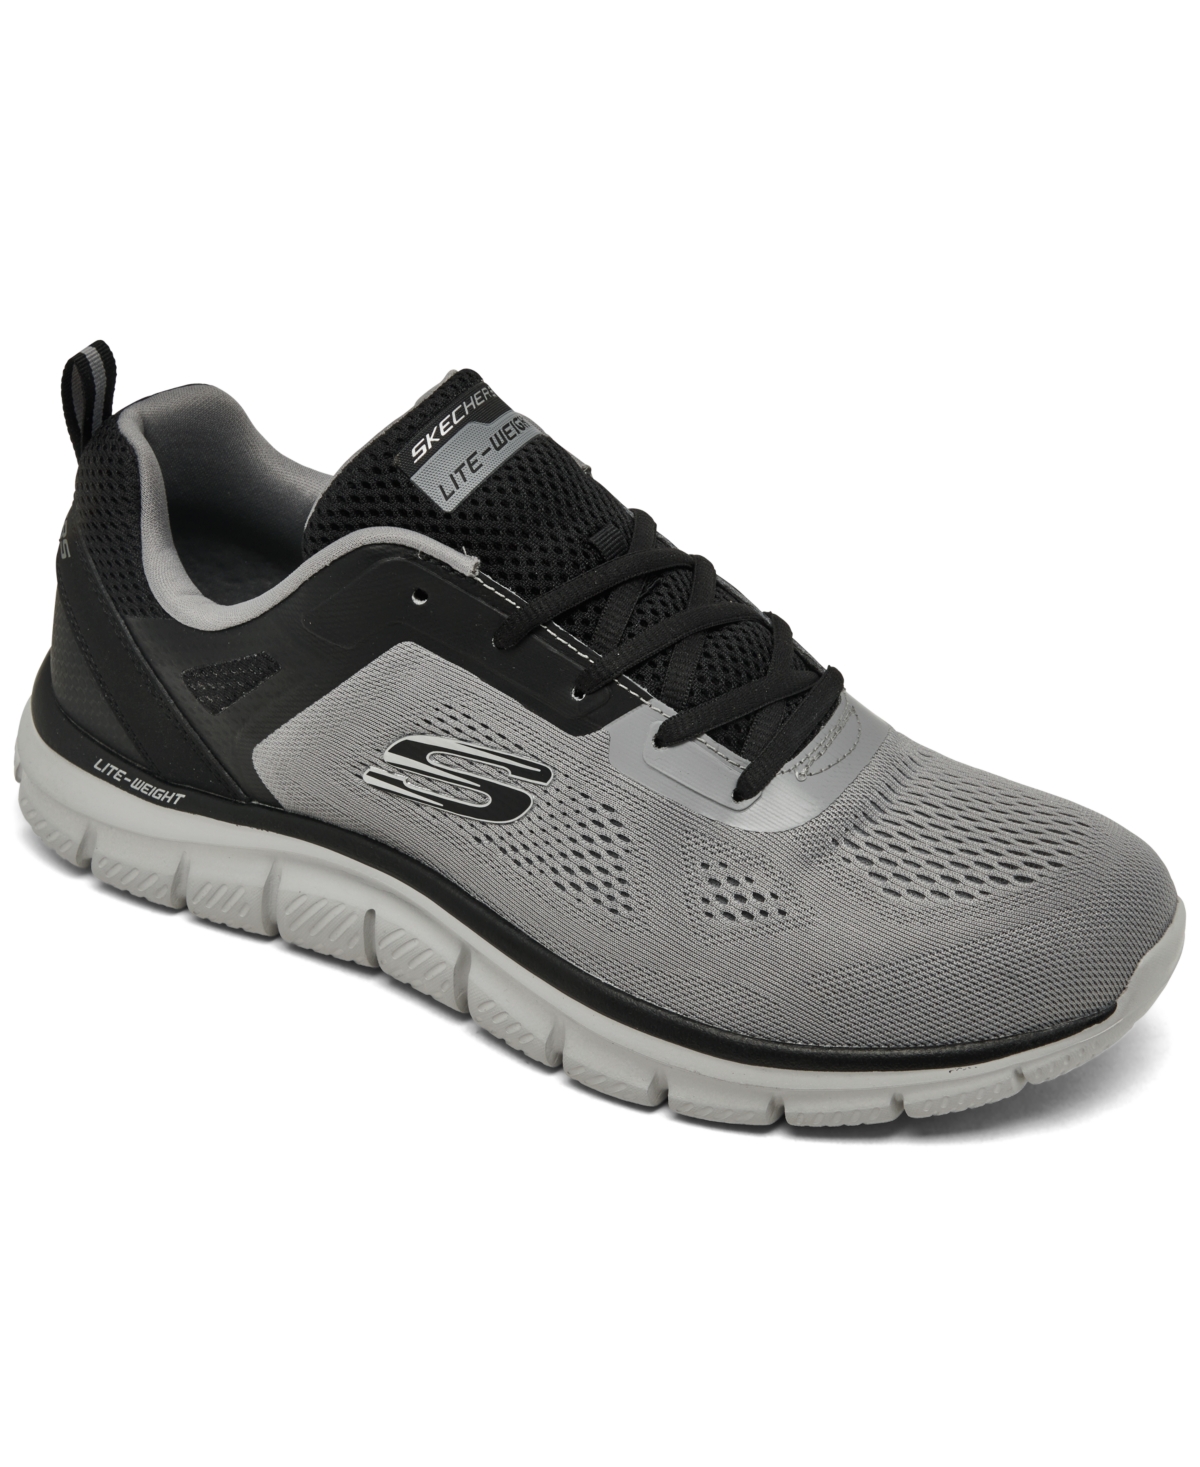 Men's Track - Broader Memory Foam Training Sneakers from Finish Line - Grey/black